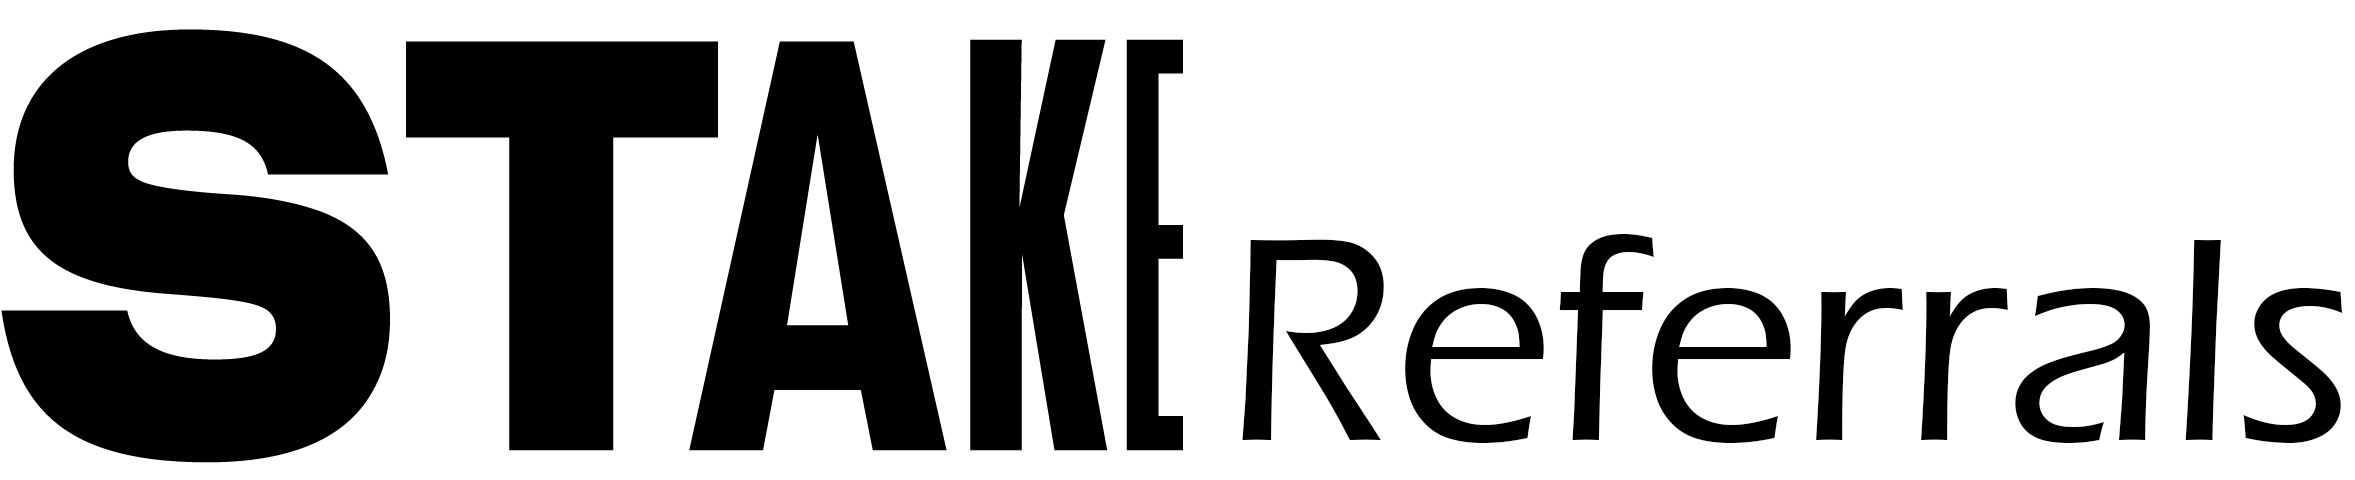 Stake Referrals Logo